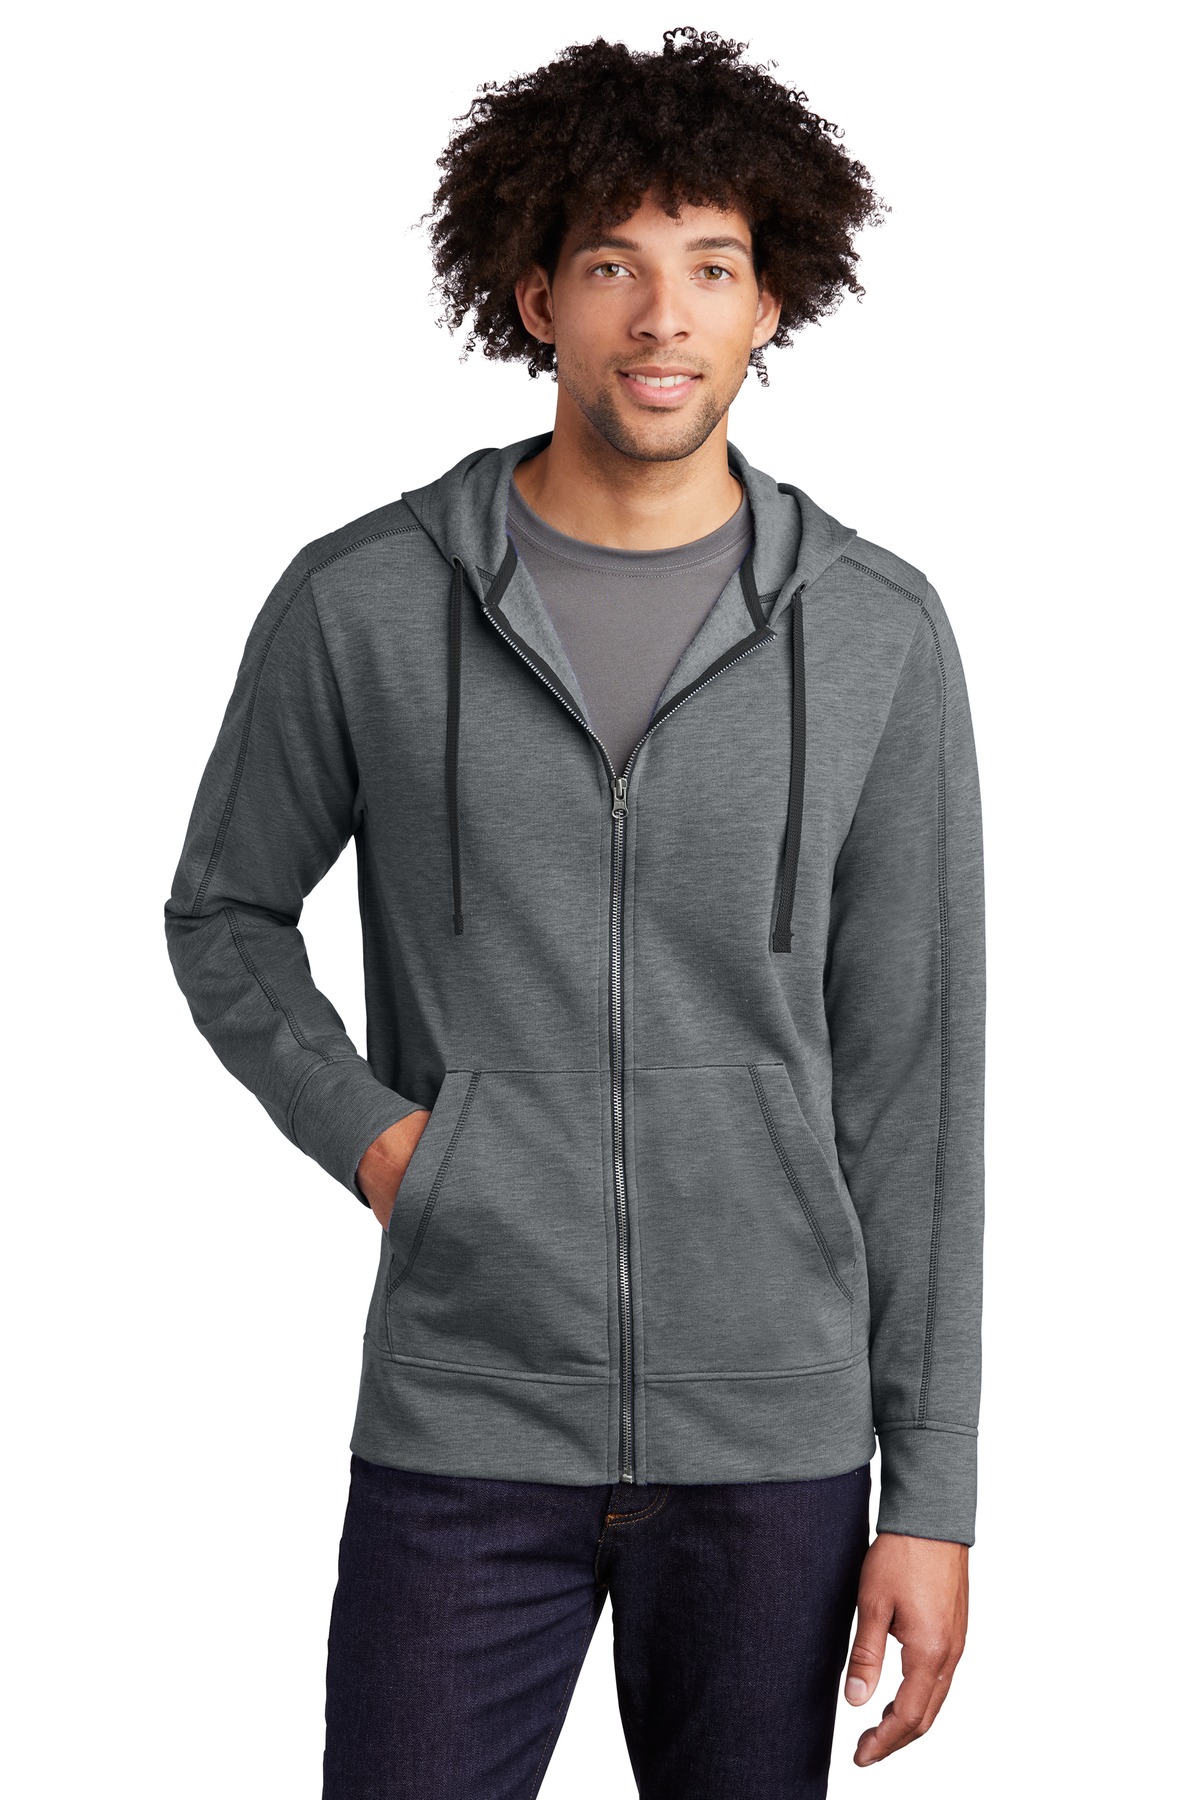 Sport-Tek Corporate Hospitality Sweatshirts&Fleece ® PosiCharge ® Tri-Blend Wicking Fleece Full-Zip Hooded Jacket-Sport-Tek